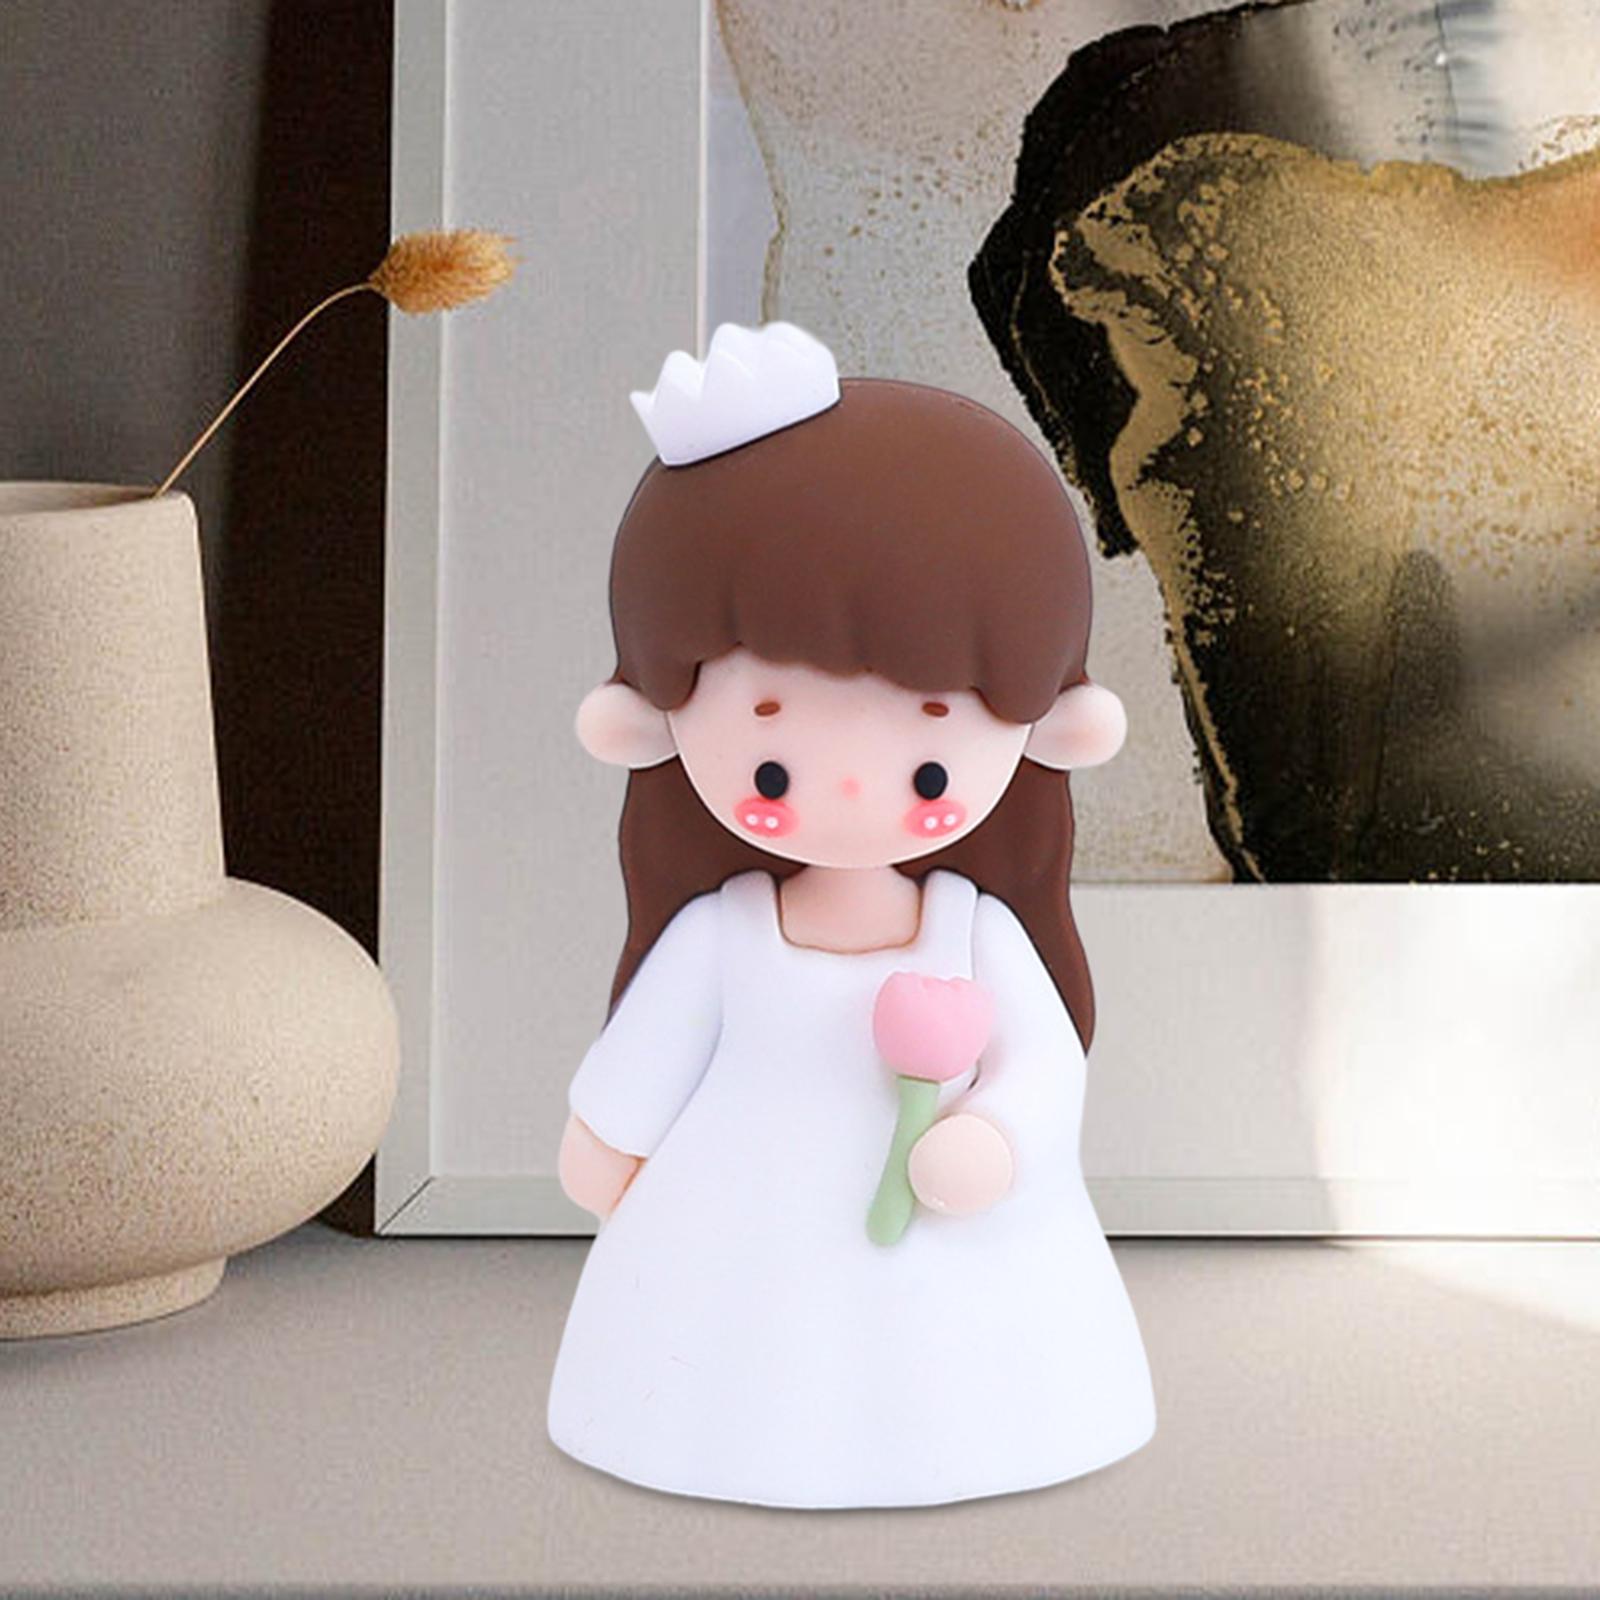 Doll Statue Sculpture Gnome Love Figures for Anniversary Desktop Living Room bride